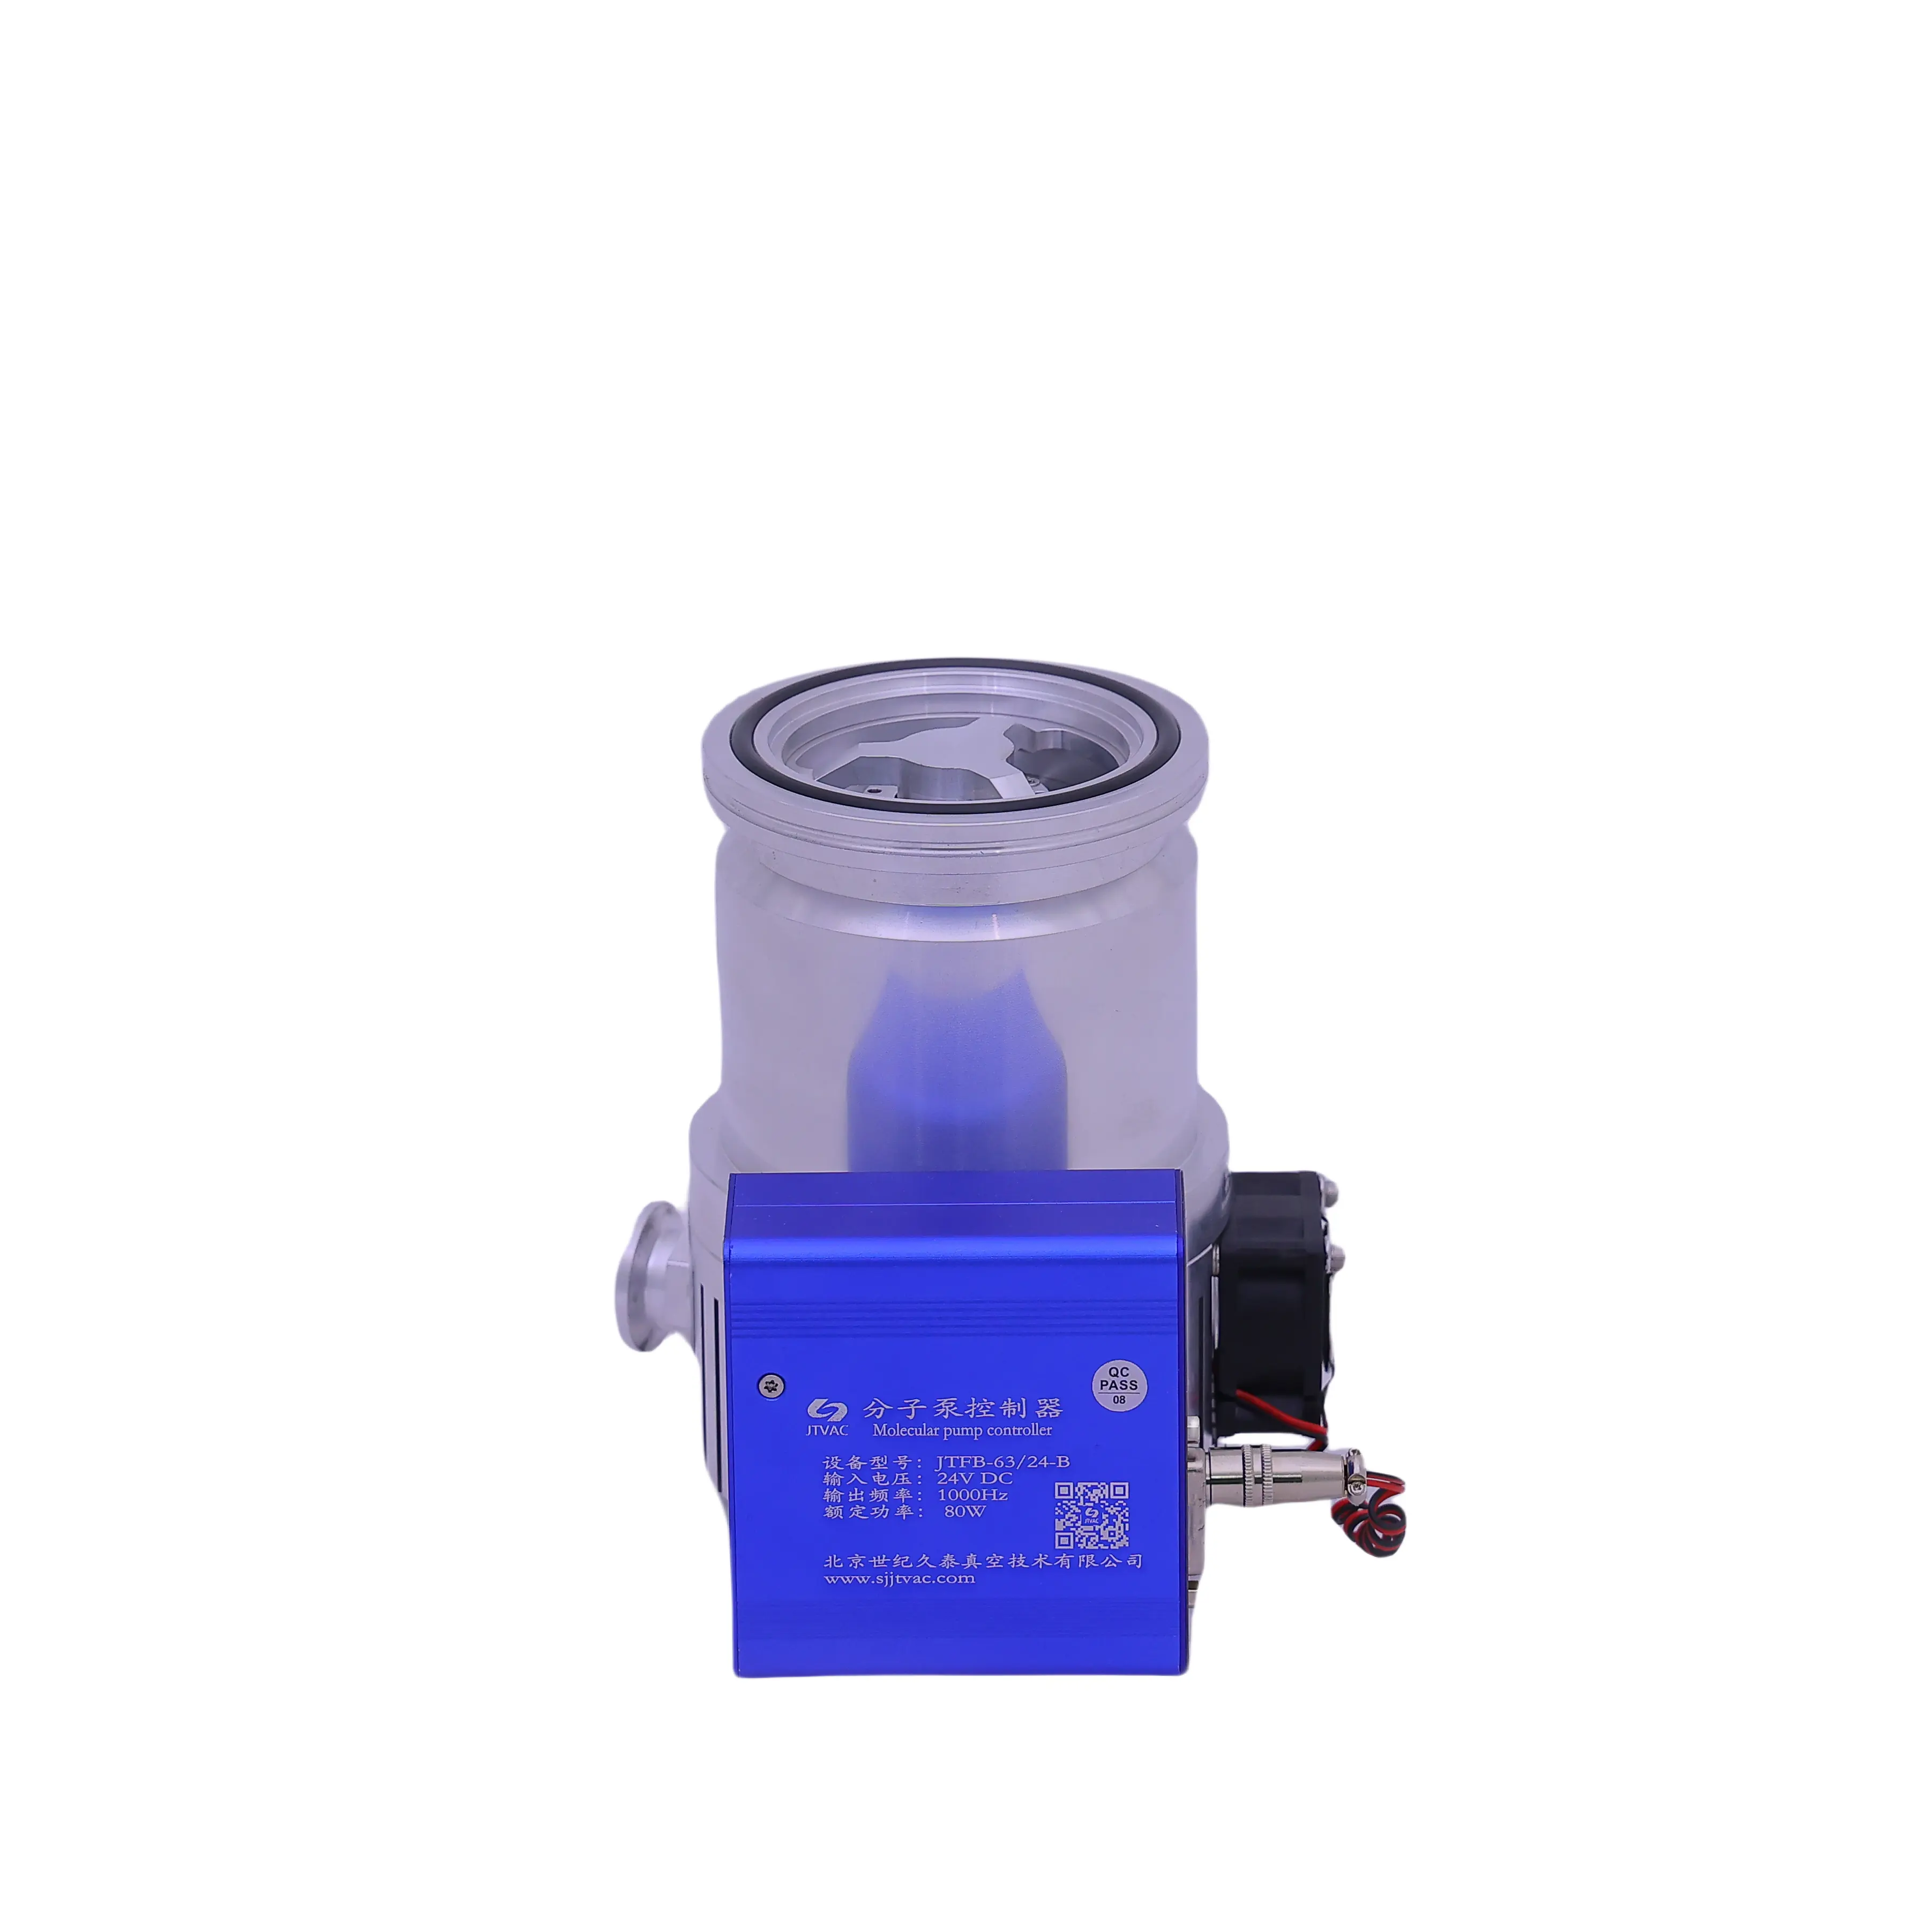 JTFB-63/80 Turbo Pumps Turbomolecular Vacuum Pump For Instruments